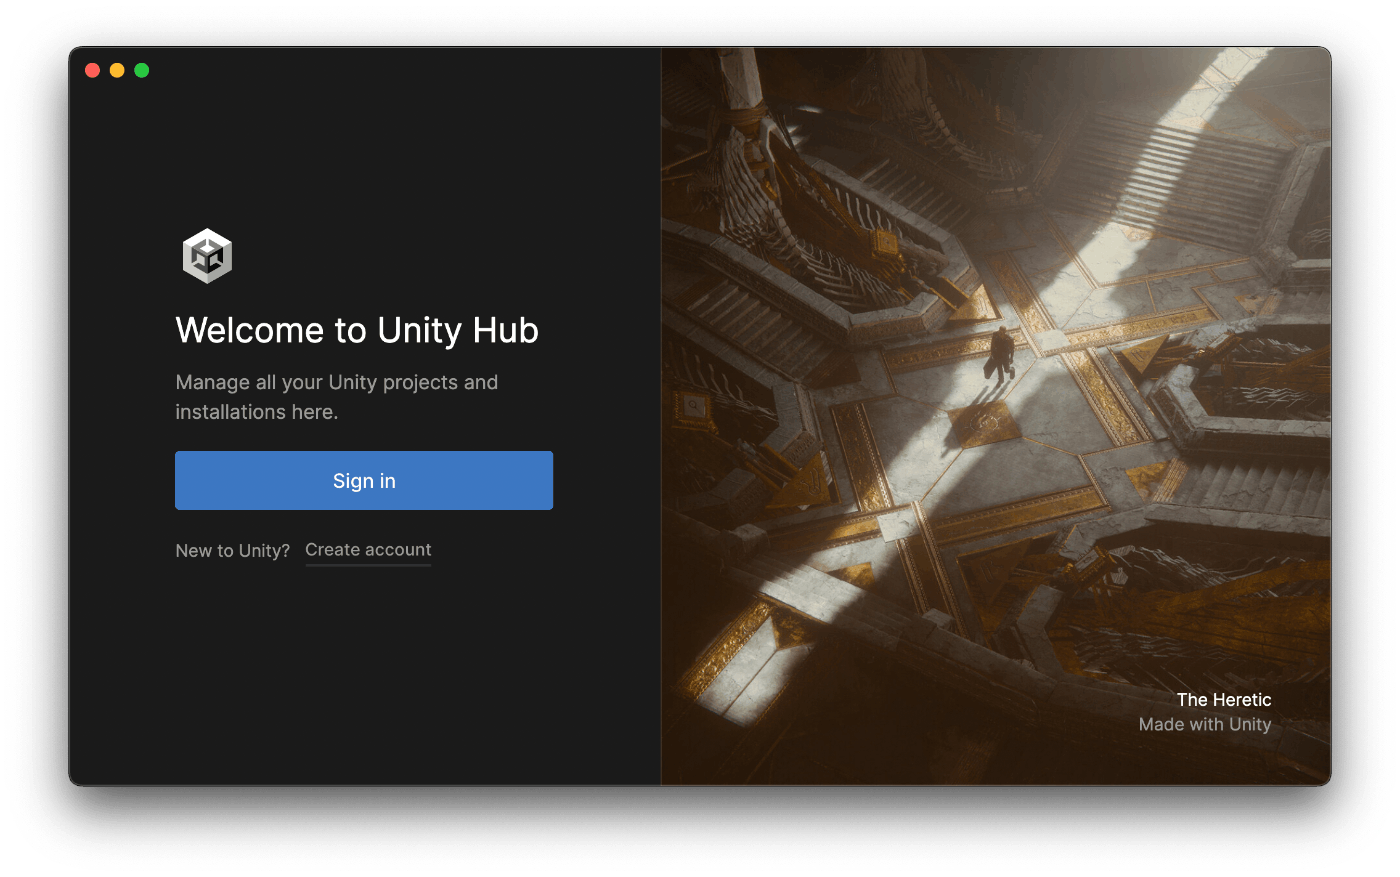 unity mac m1 download